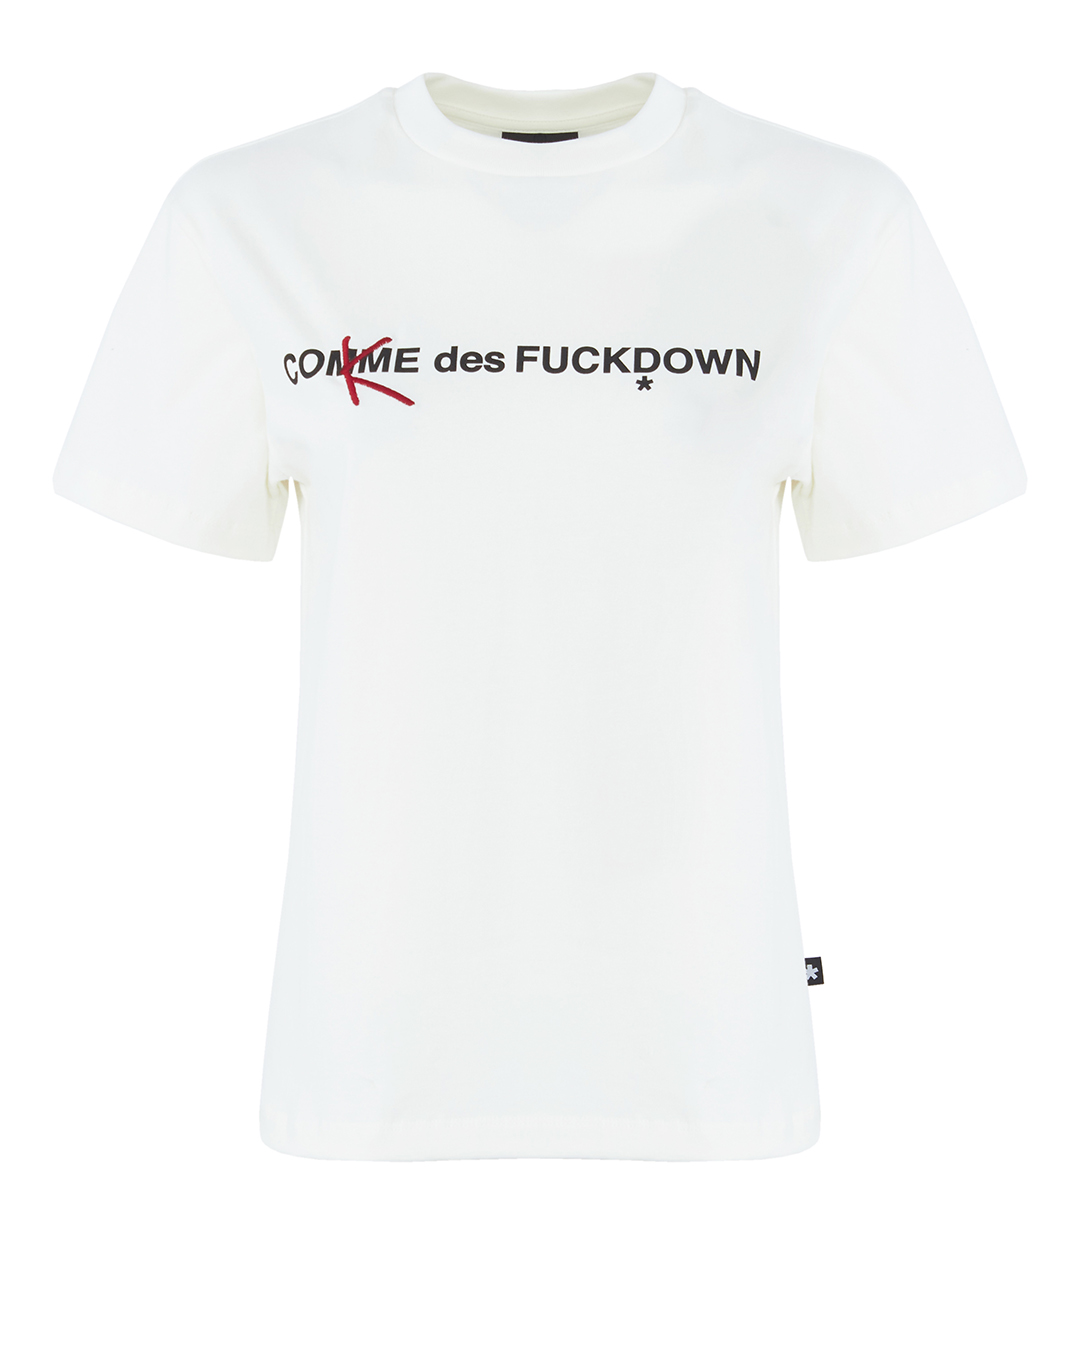 COMME des FUCKDOWN с логотипом бренда  артикул  марки COMME des FUCKDOWN купить за 9900 руб.